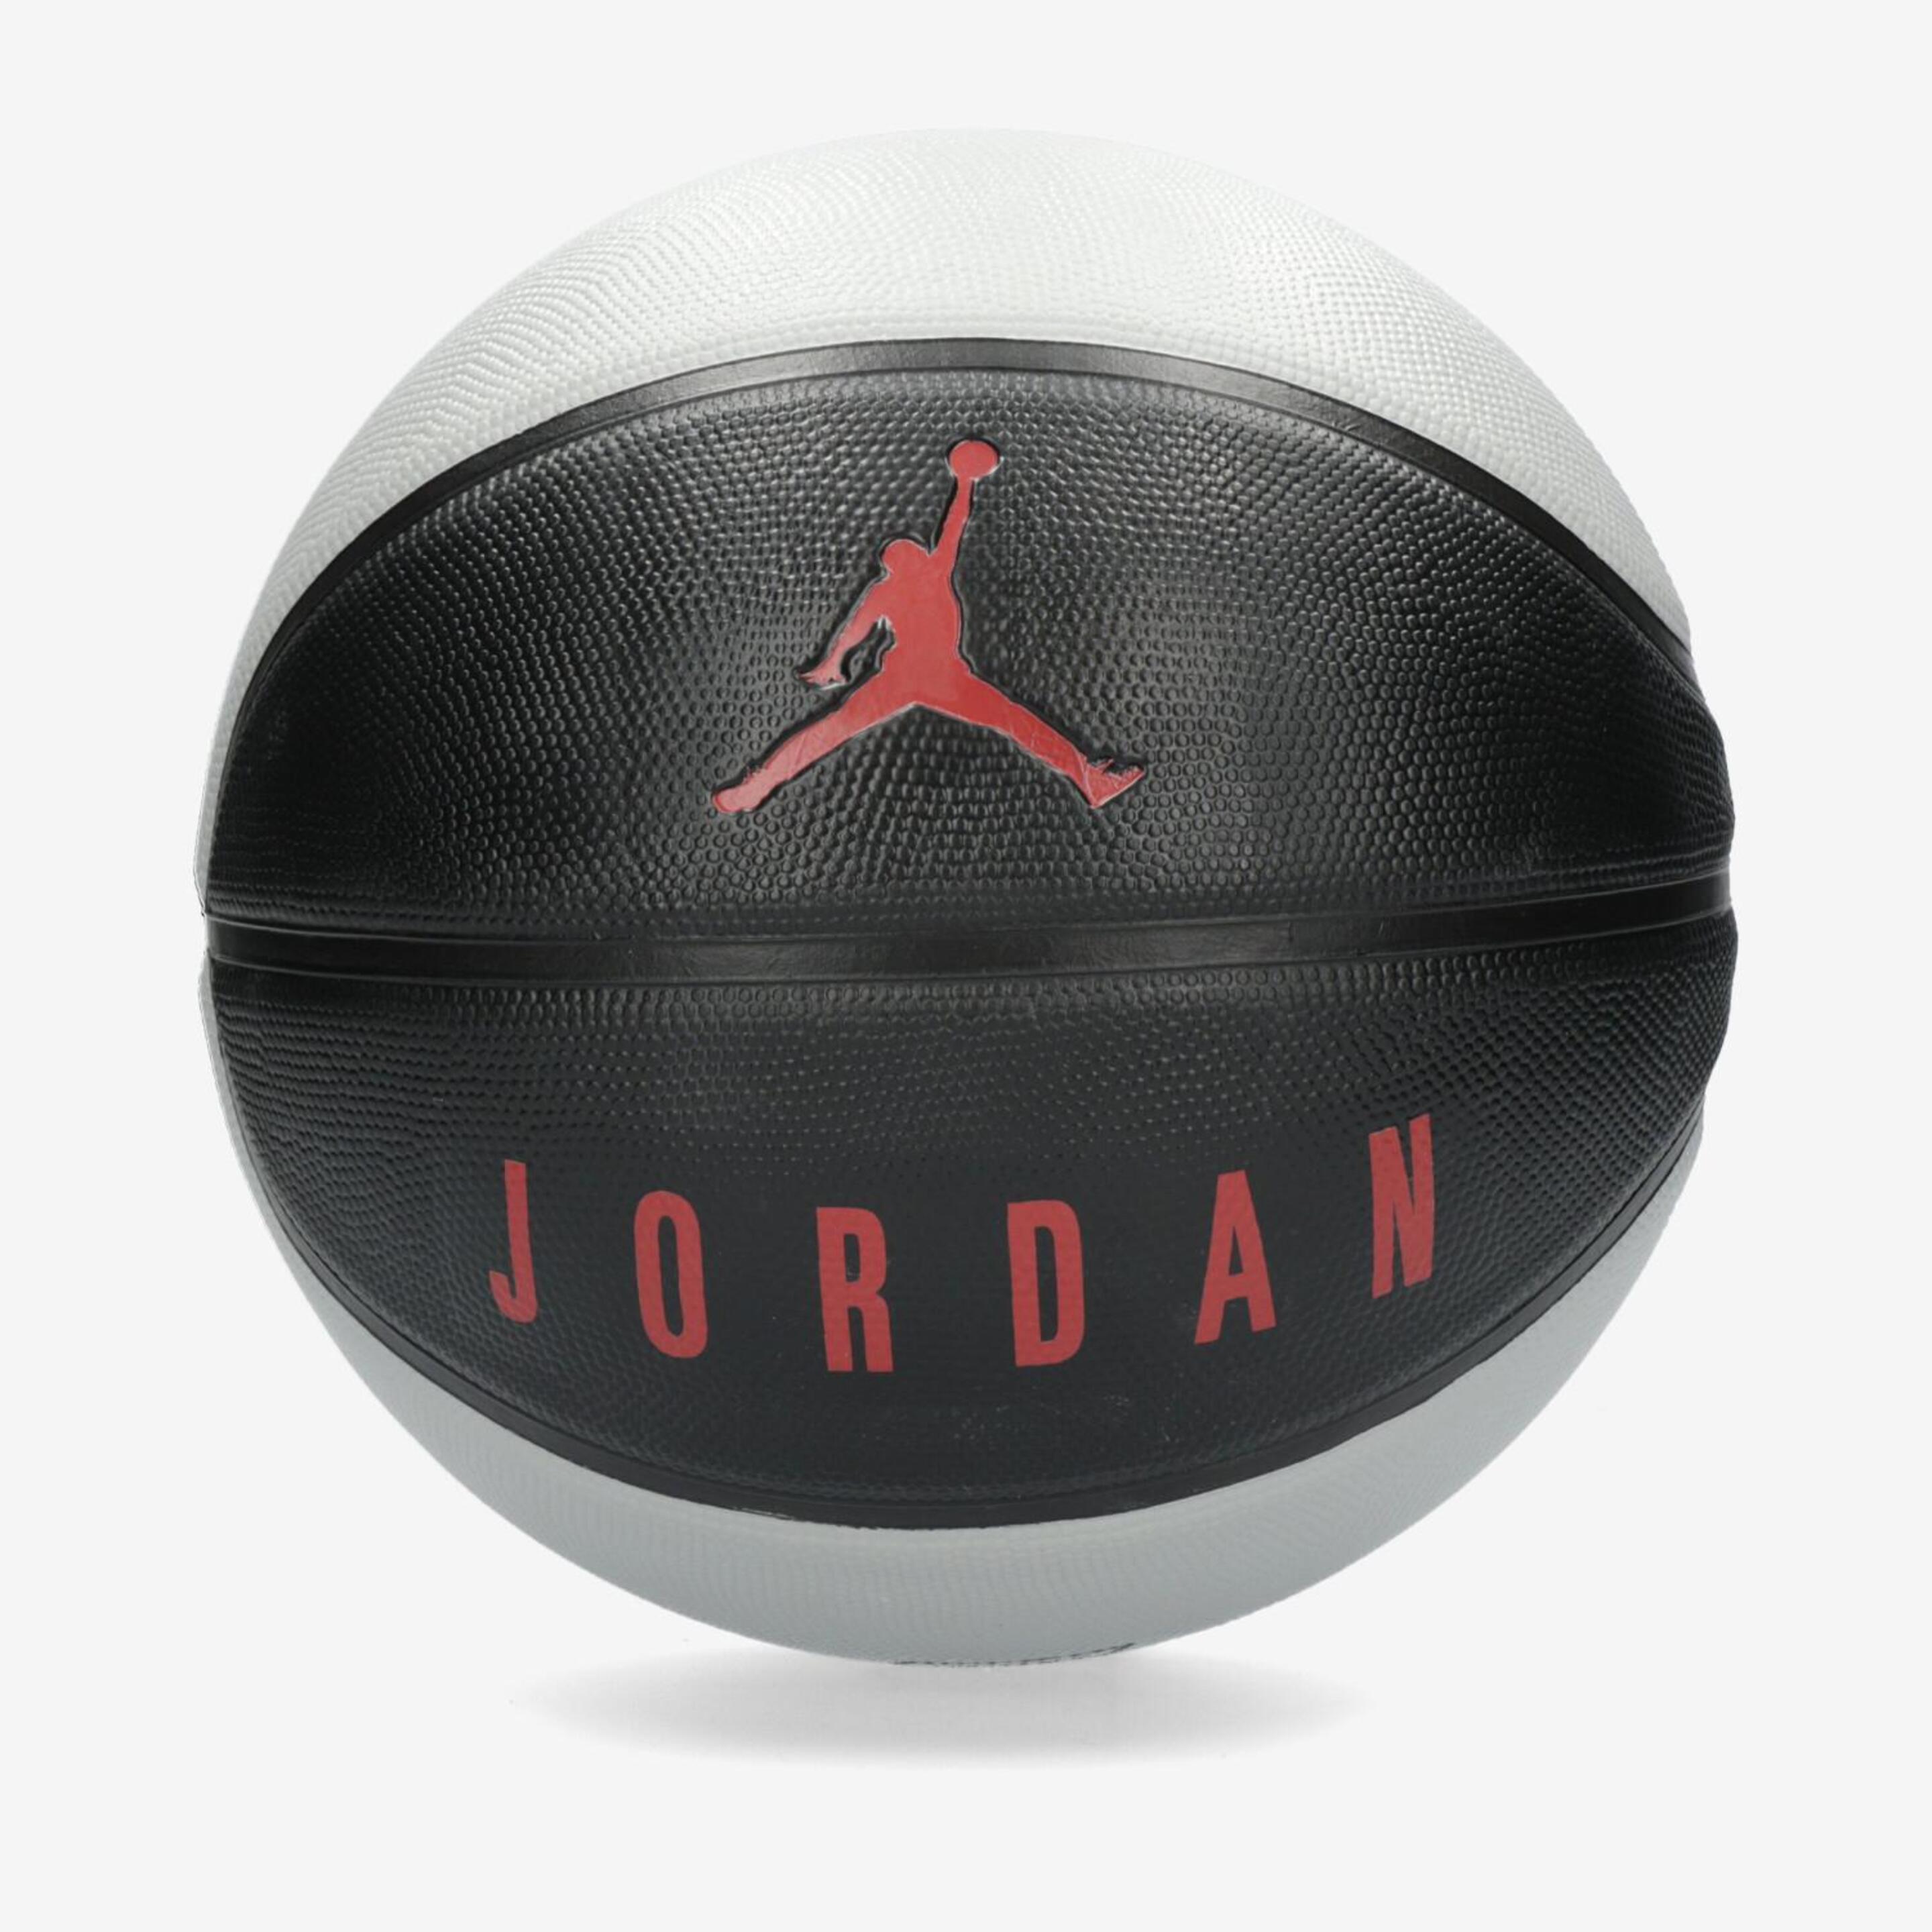 Balon Nike Jordan